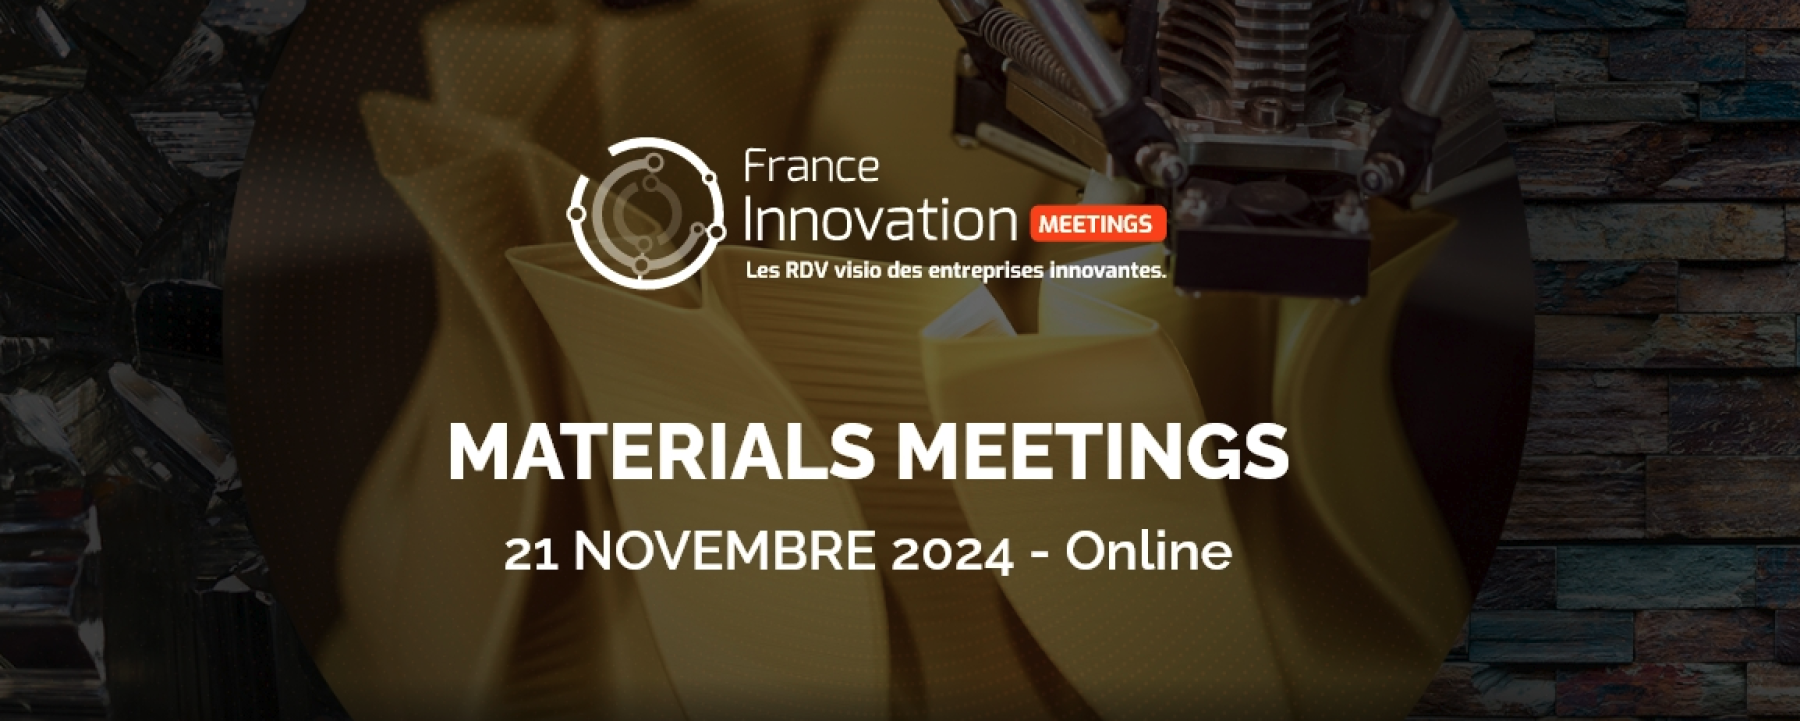 France Innovation Materials Meetings 